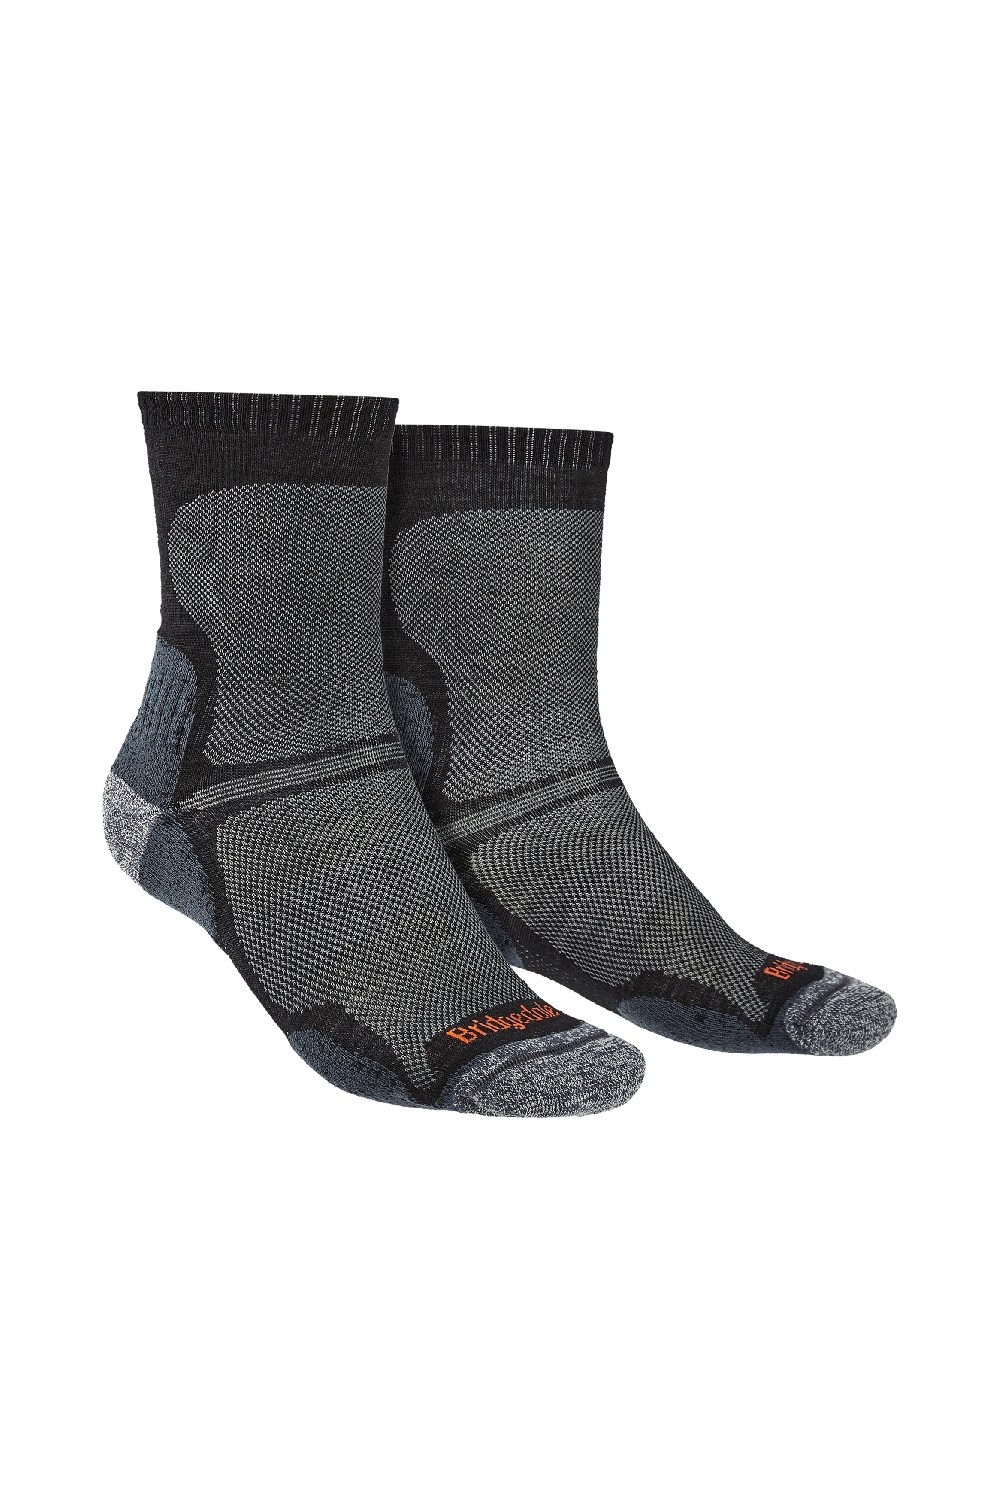 Mens Ultralight T2 Merino Hiking Socks